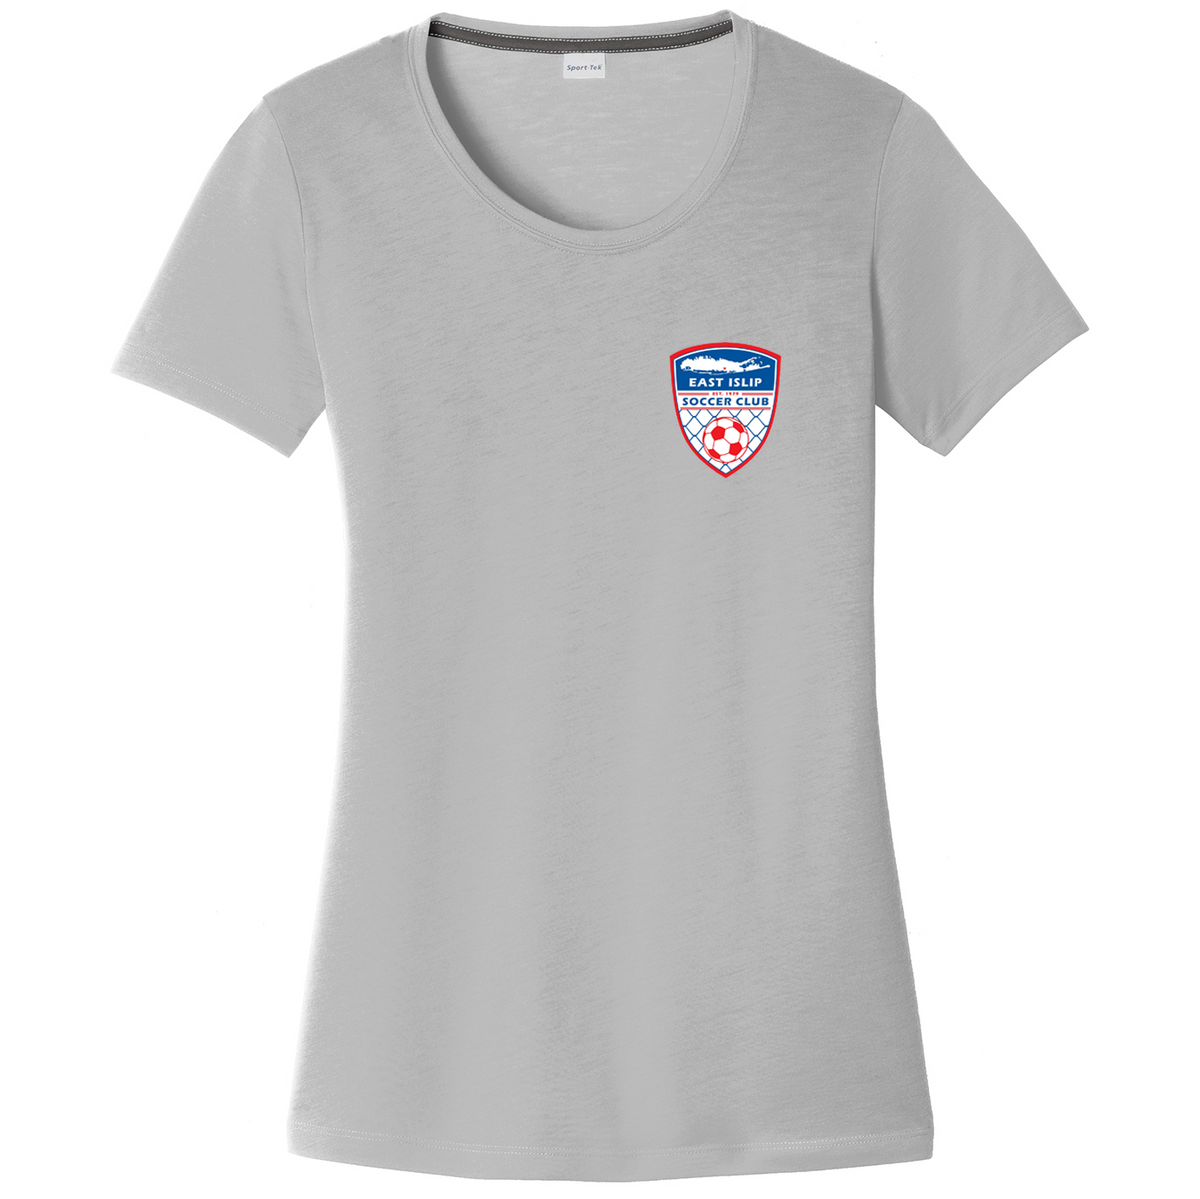 East Islip Soccer Club  Women's CottonTouch Performance T-Shirt